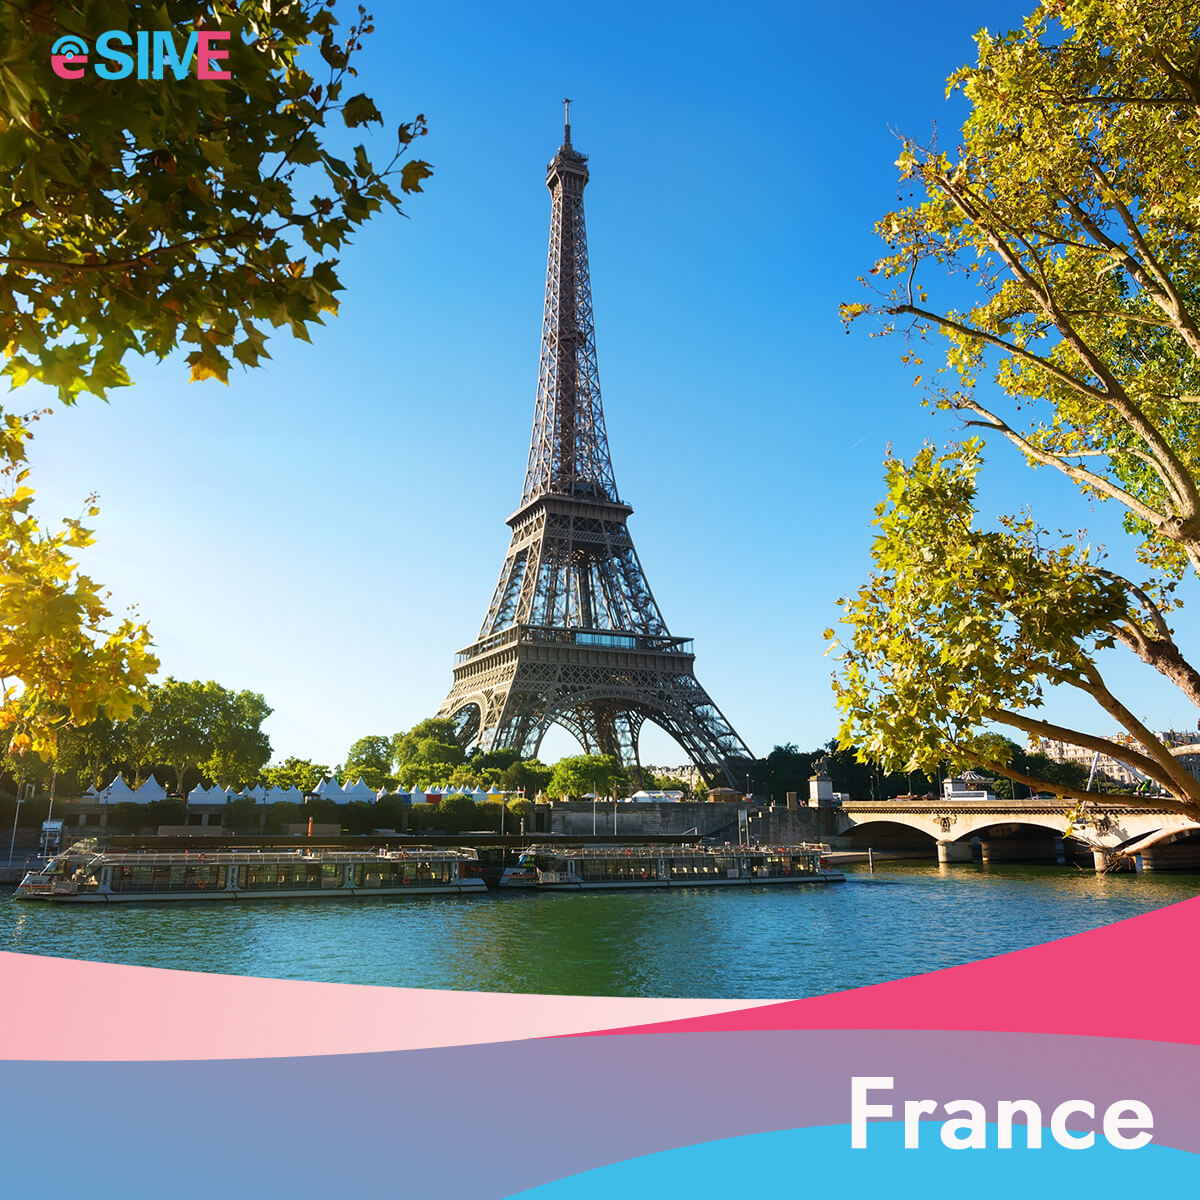 eSIM 1GB Data per Day for France Travel